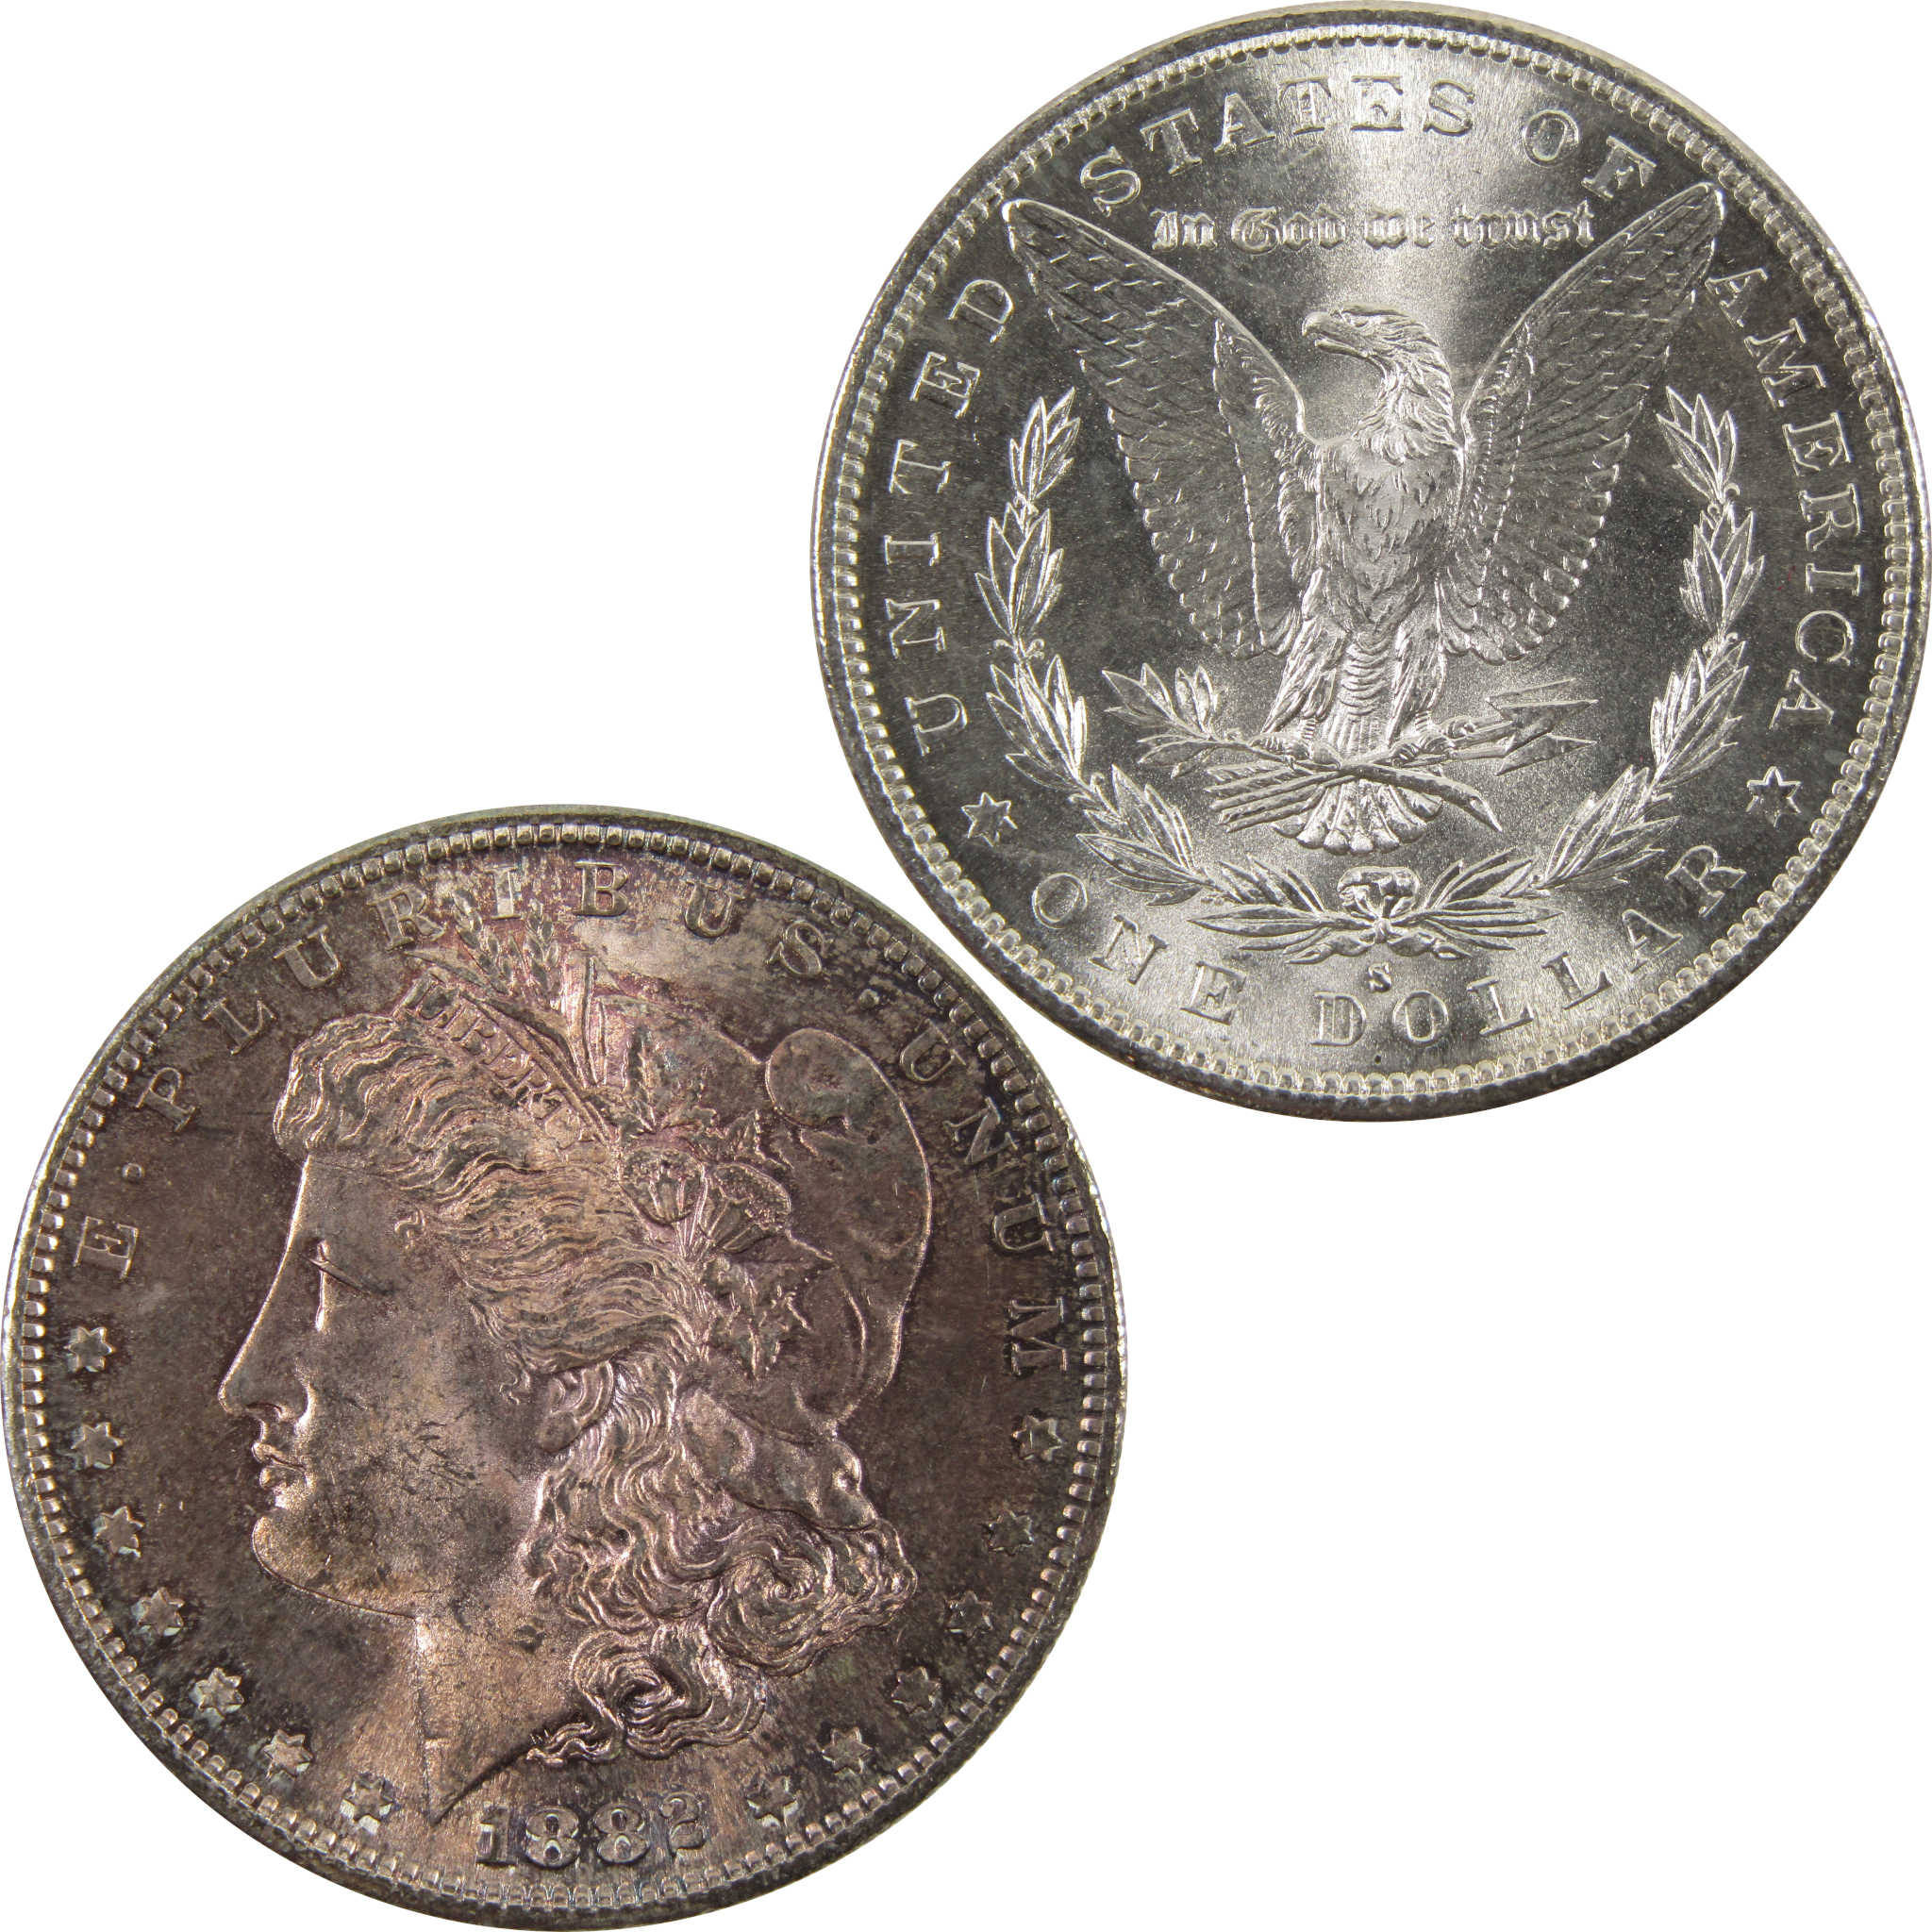 Morgan Silver Dollar Uncirculated 1882-S